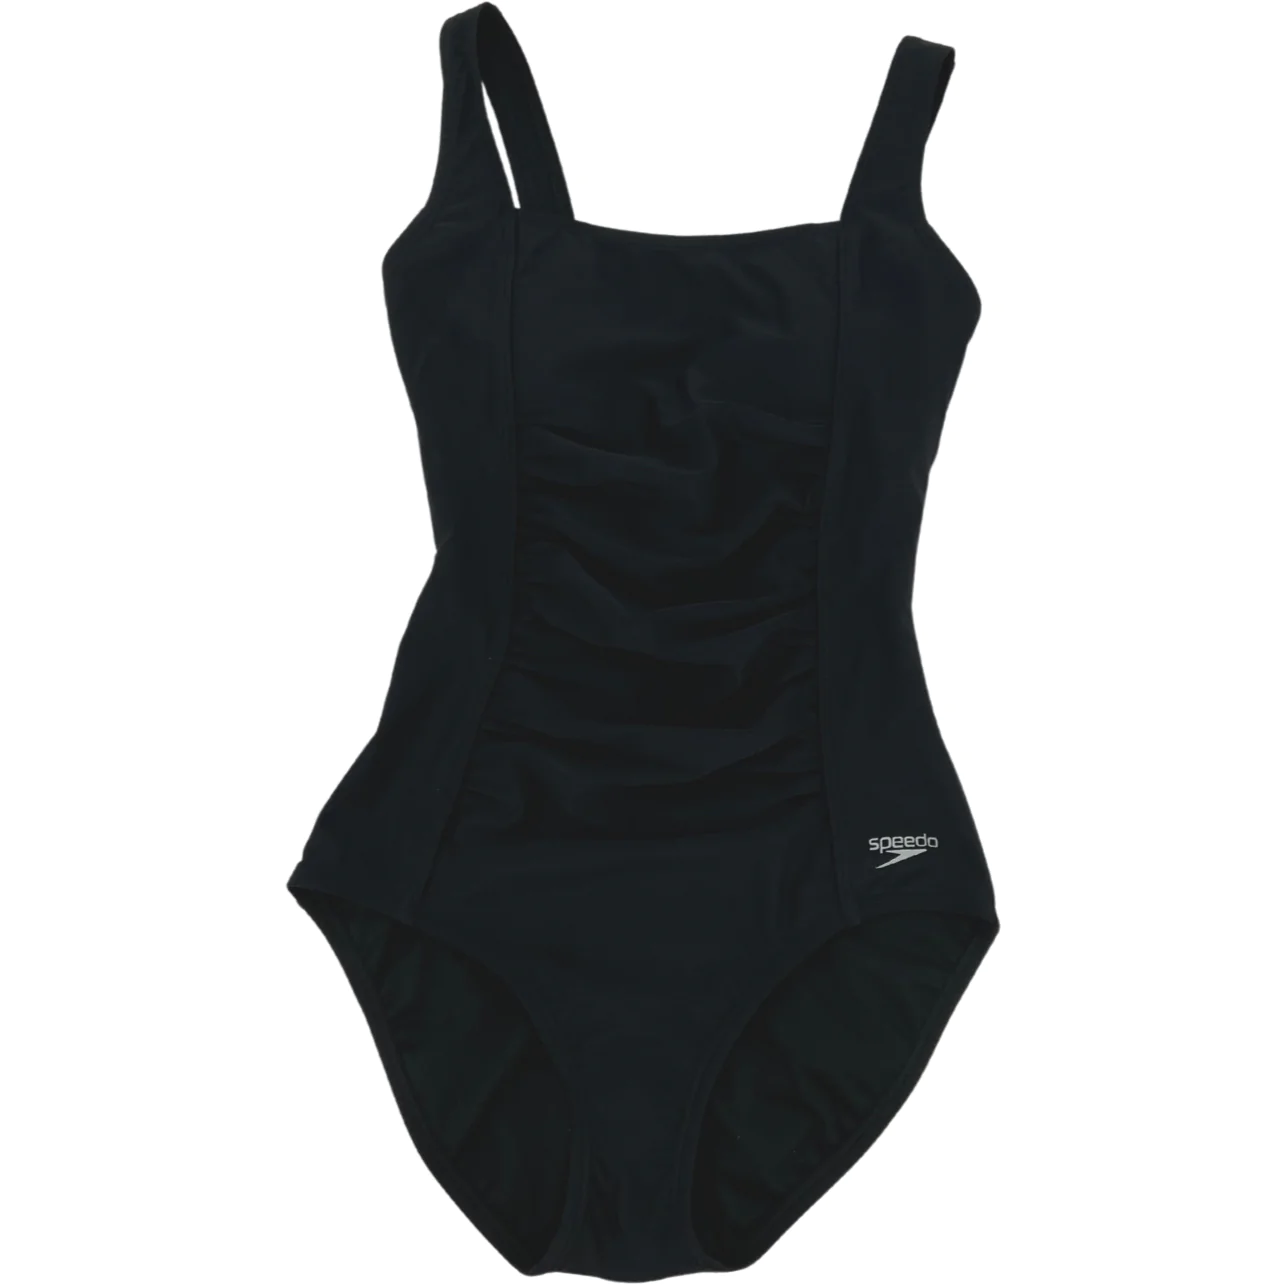 Speedo Women's Bathing Suit / One Piece Swimsuit / Black / Various Sizes